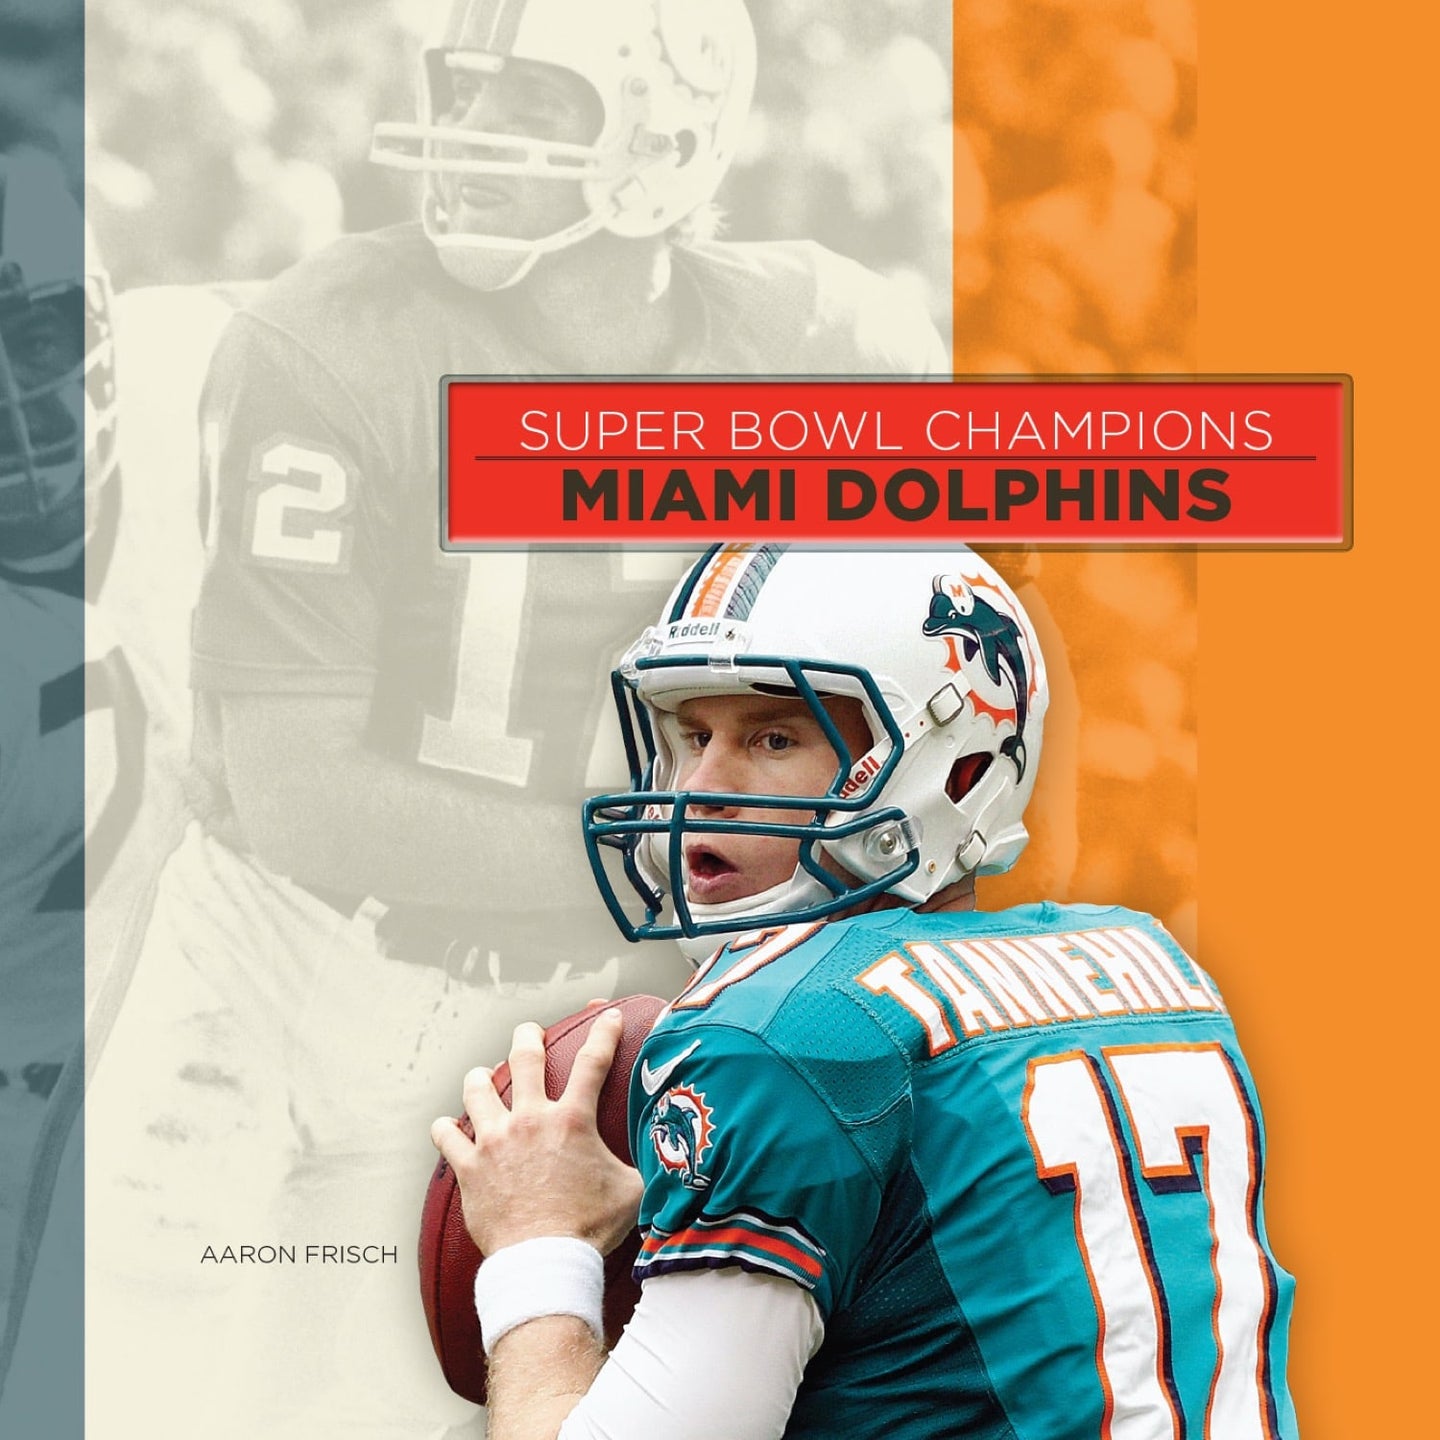 Super Bowl Champions: Miami Dolphins (2014)